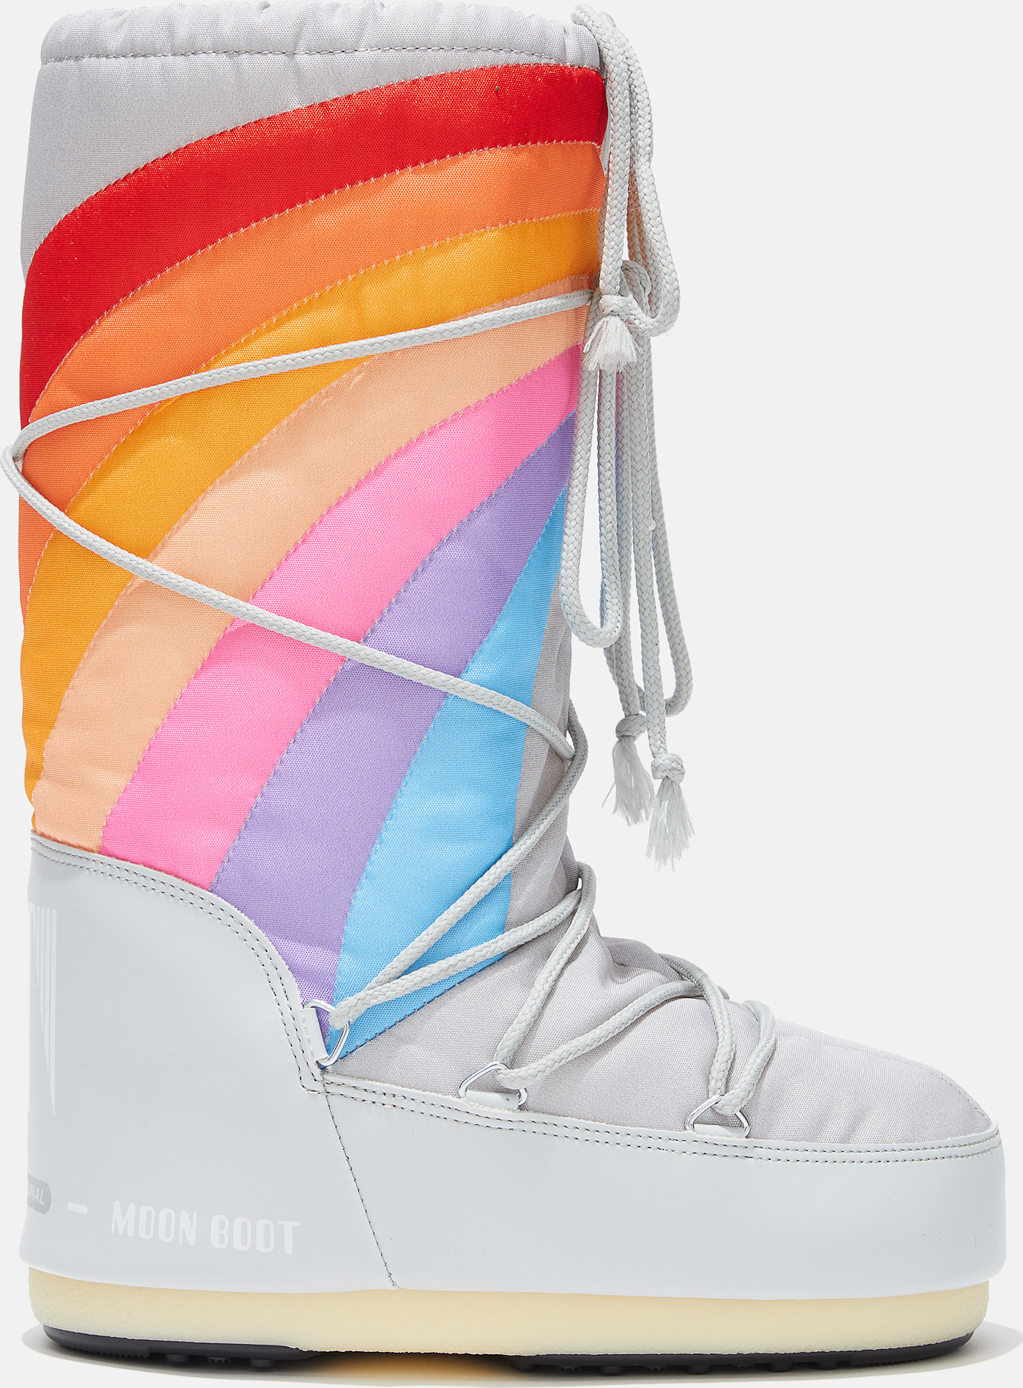 Zimní boty MOON BOOT Icon rainbow duhové Velikost: EU 39/41